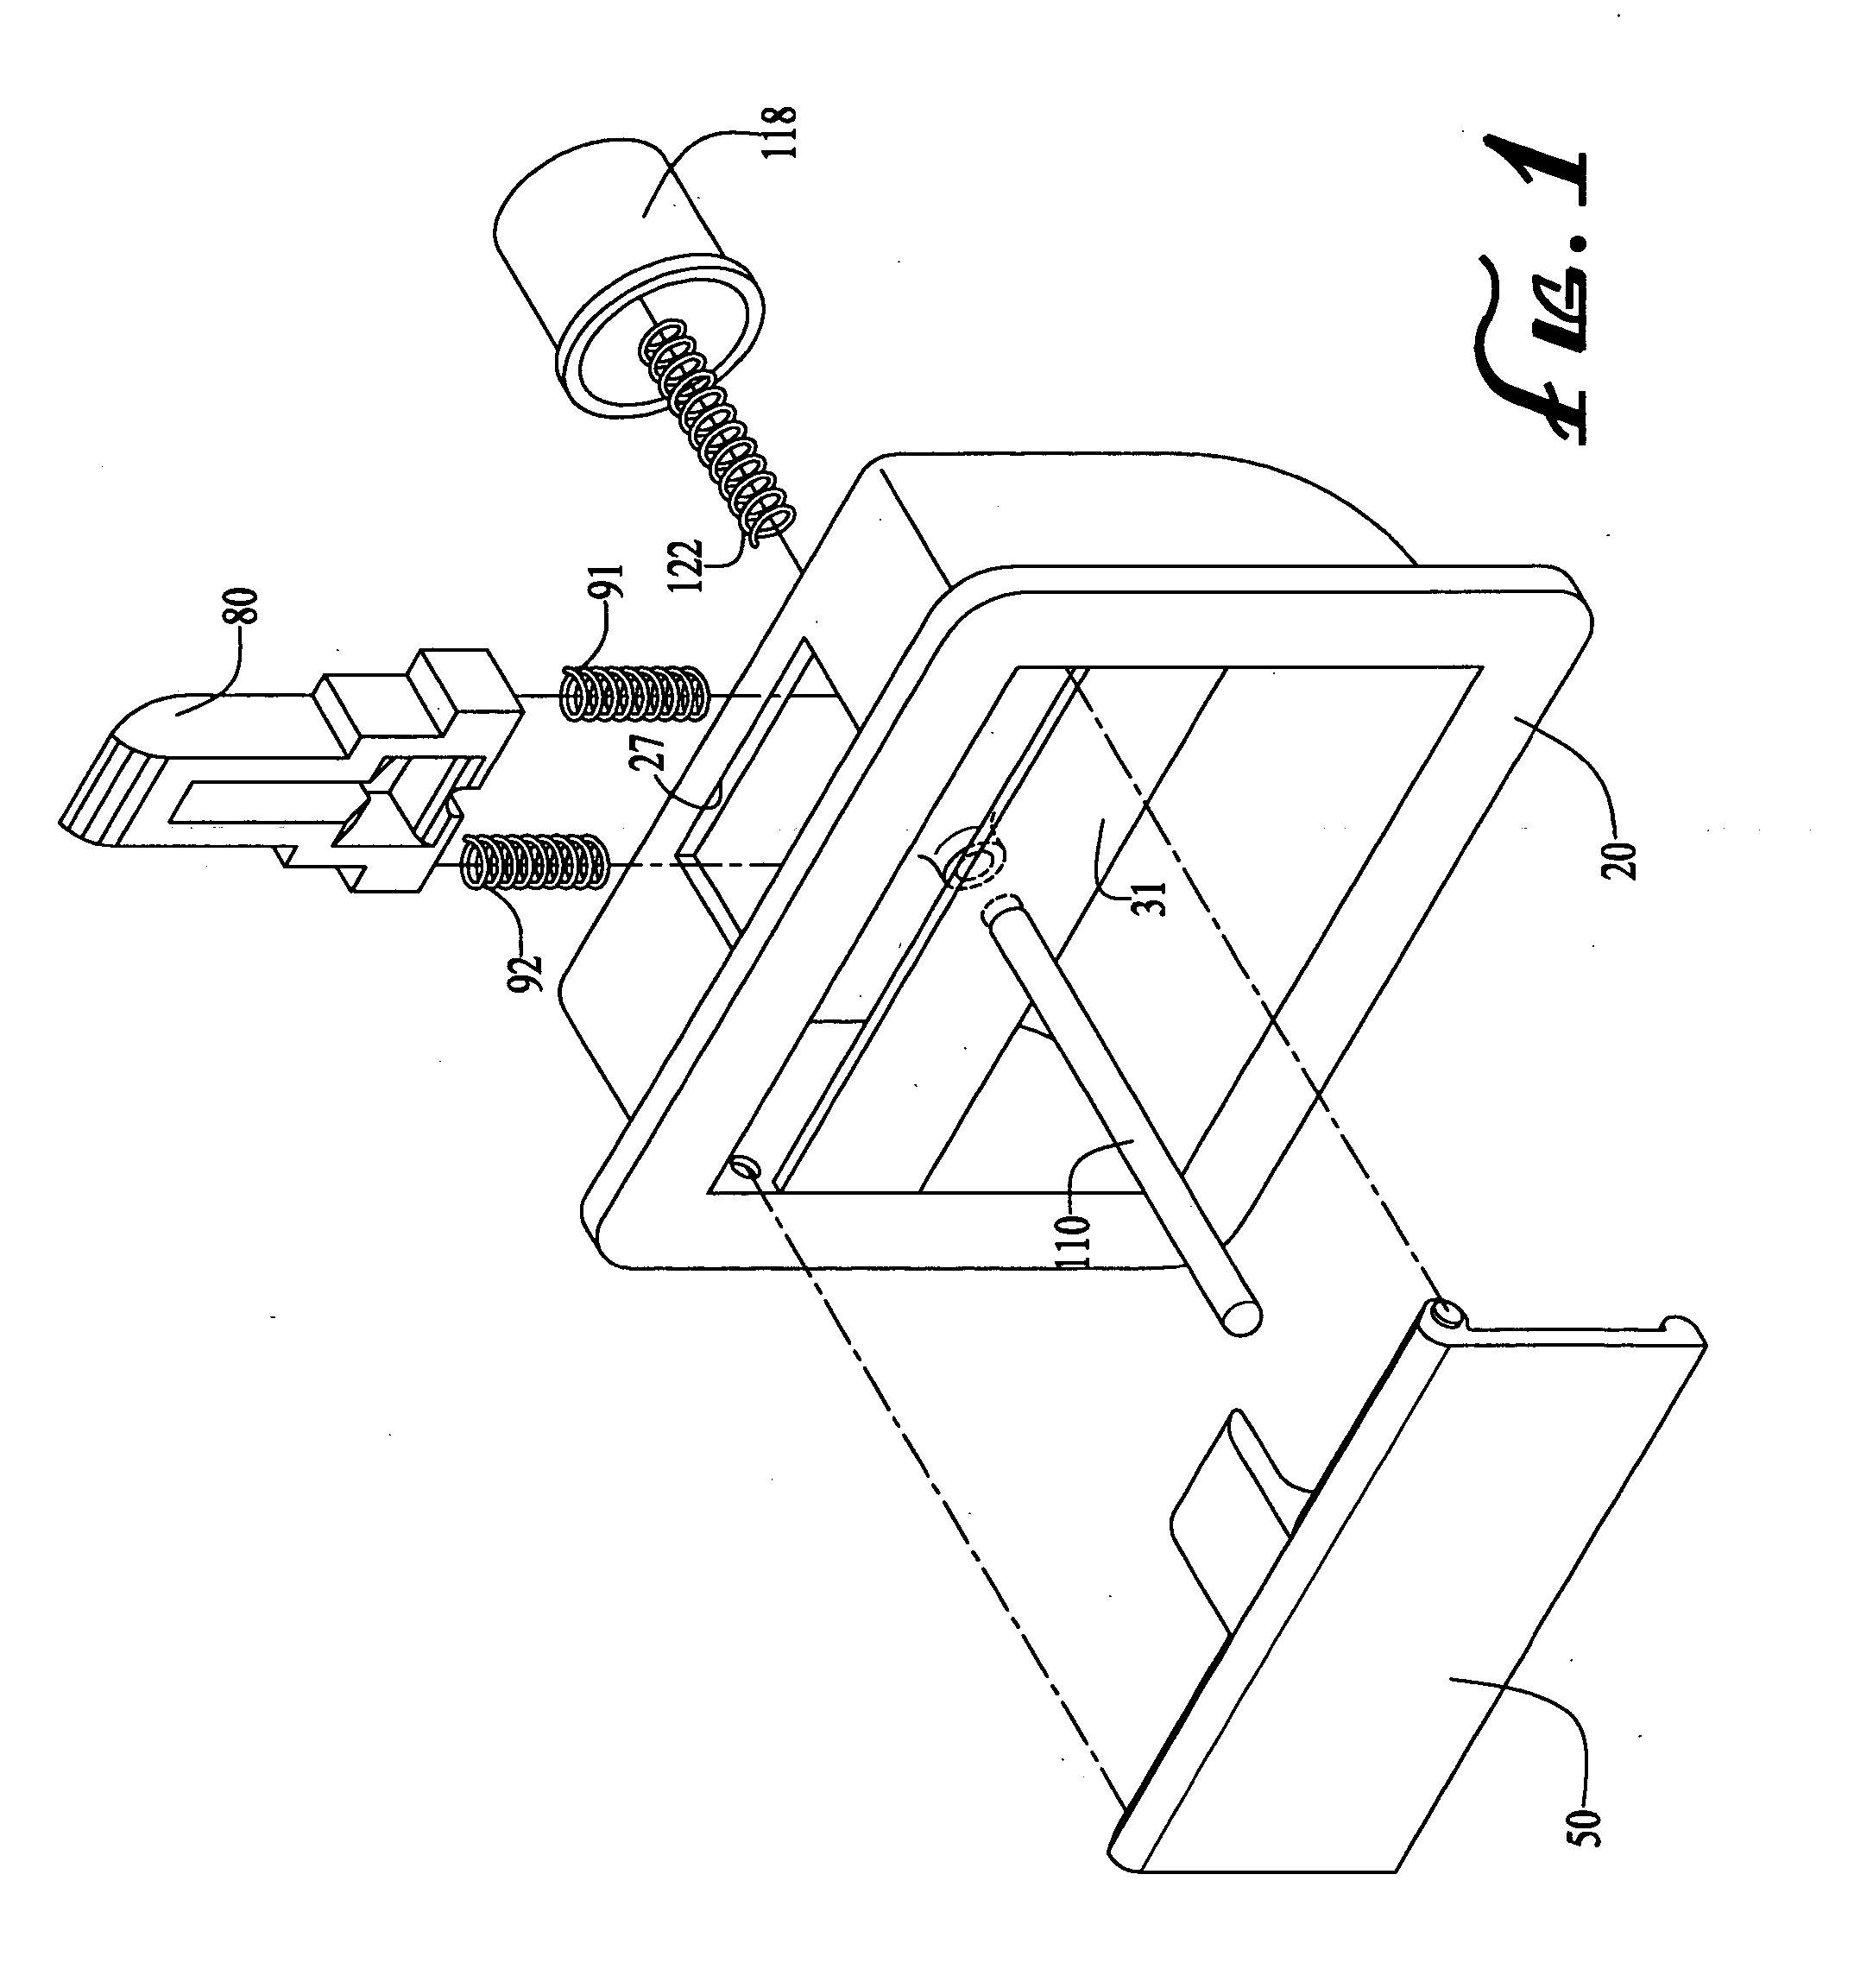 Flush handle latch mechanism